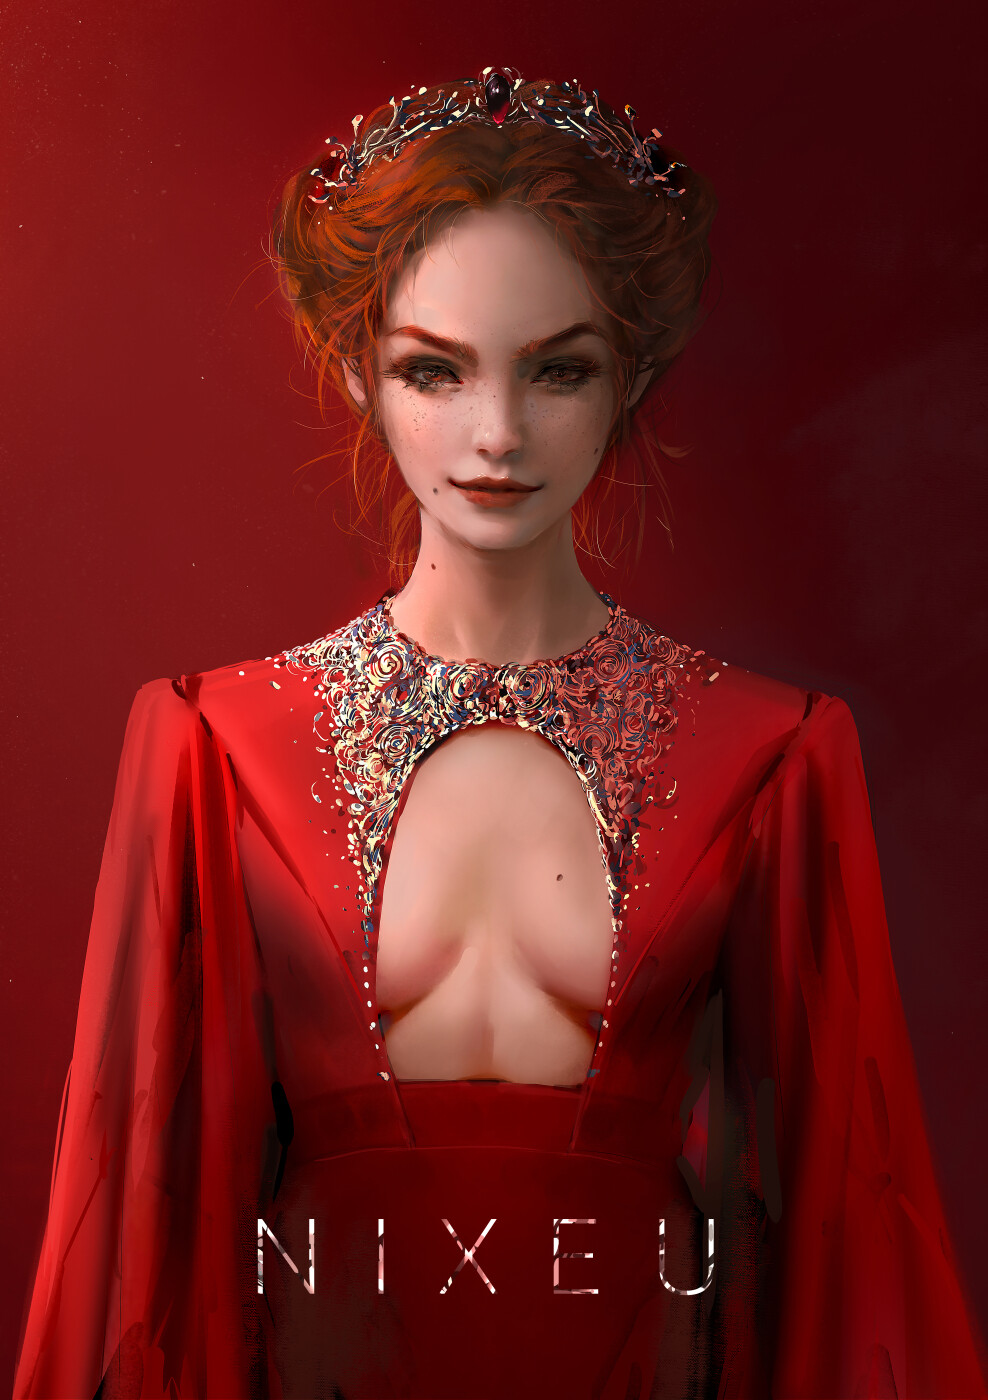 General 988x1400 digital art artwork 2D portrait display red background red dress redhead Nixeu cleavage cutout